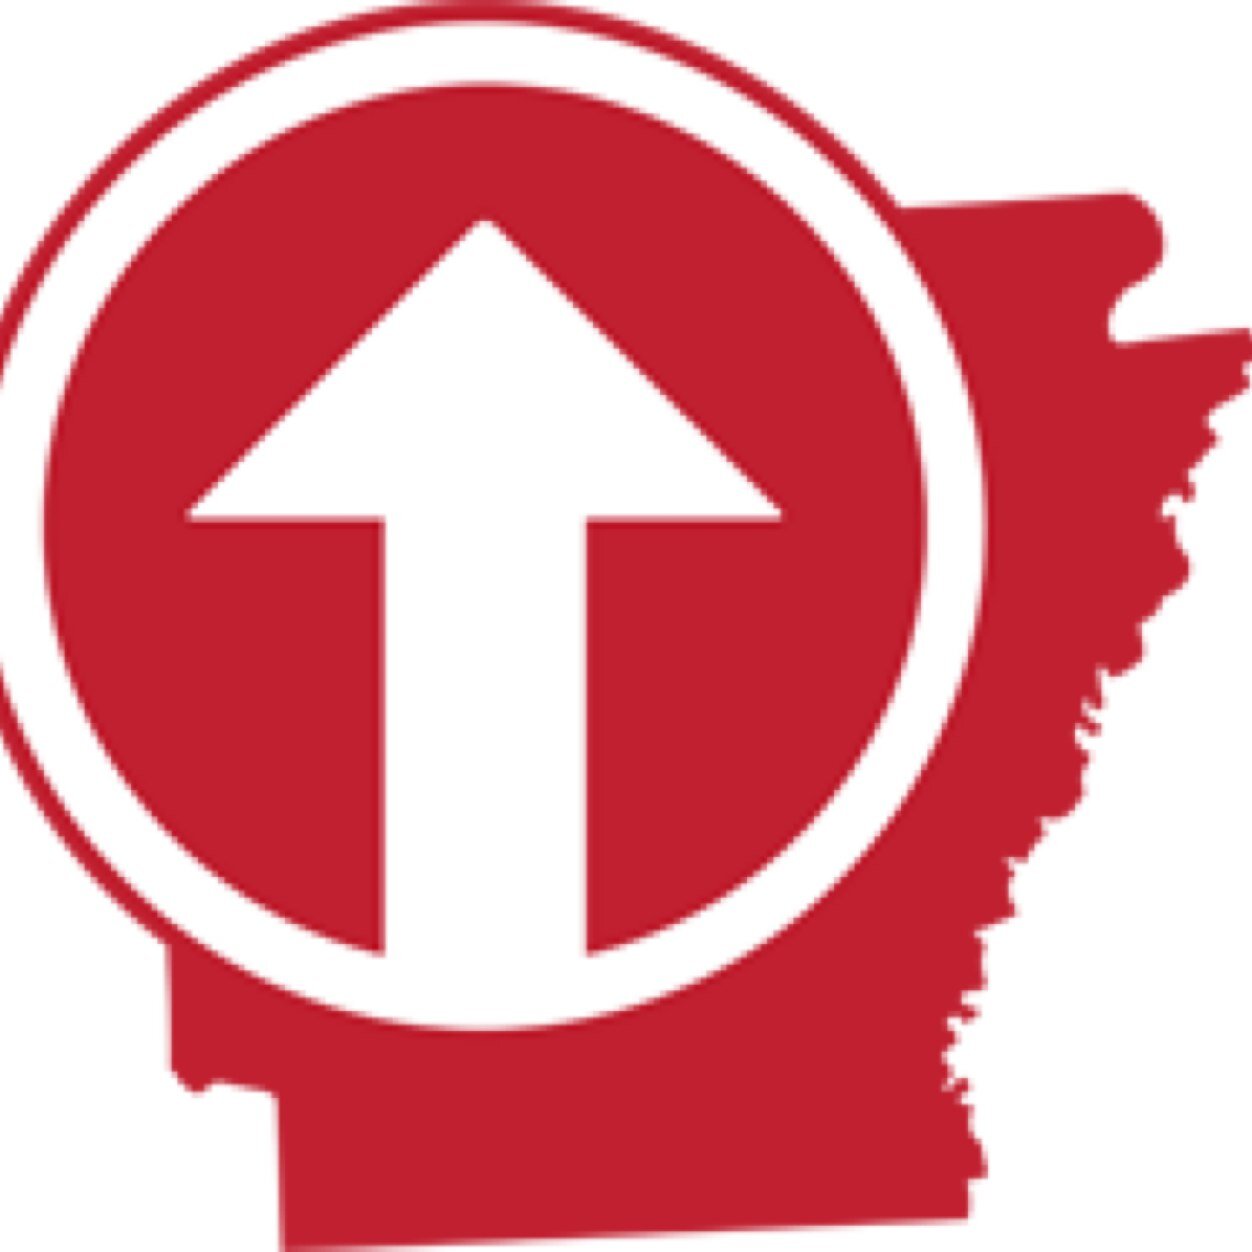 An alliance of Arkansas entrepreneurs seeking to build a strong Arkansas entrepreneurship / startup ecosystem. #ARidea